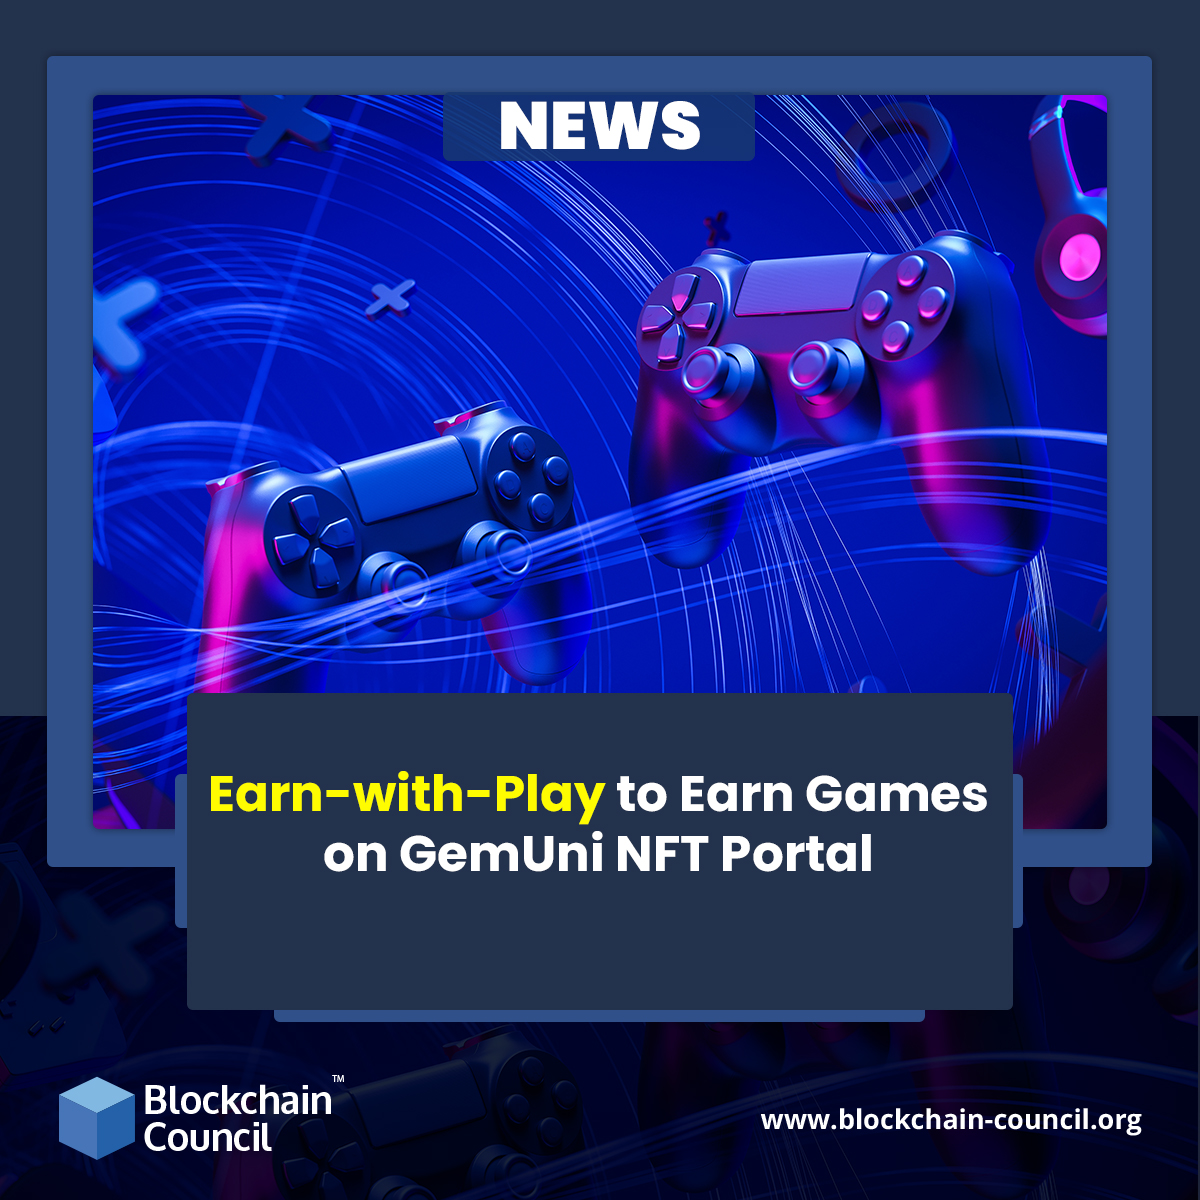 Earn-with-Play to Earn Games on GemUni NFT Portal